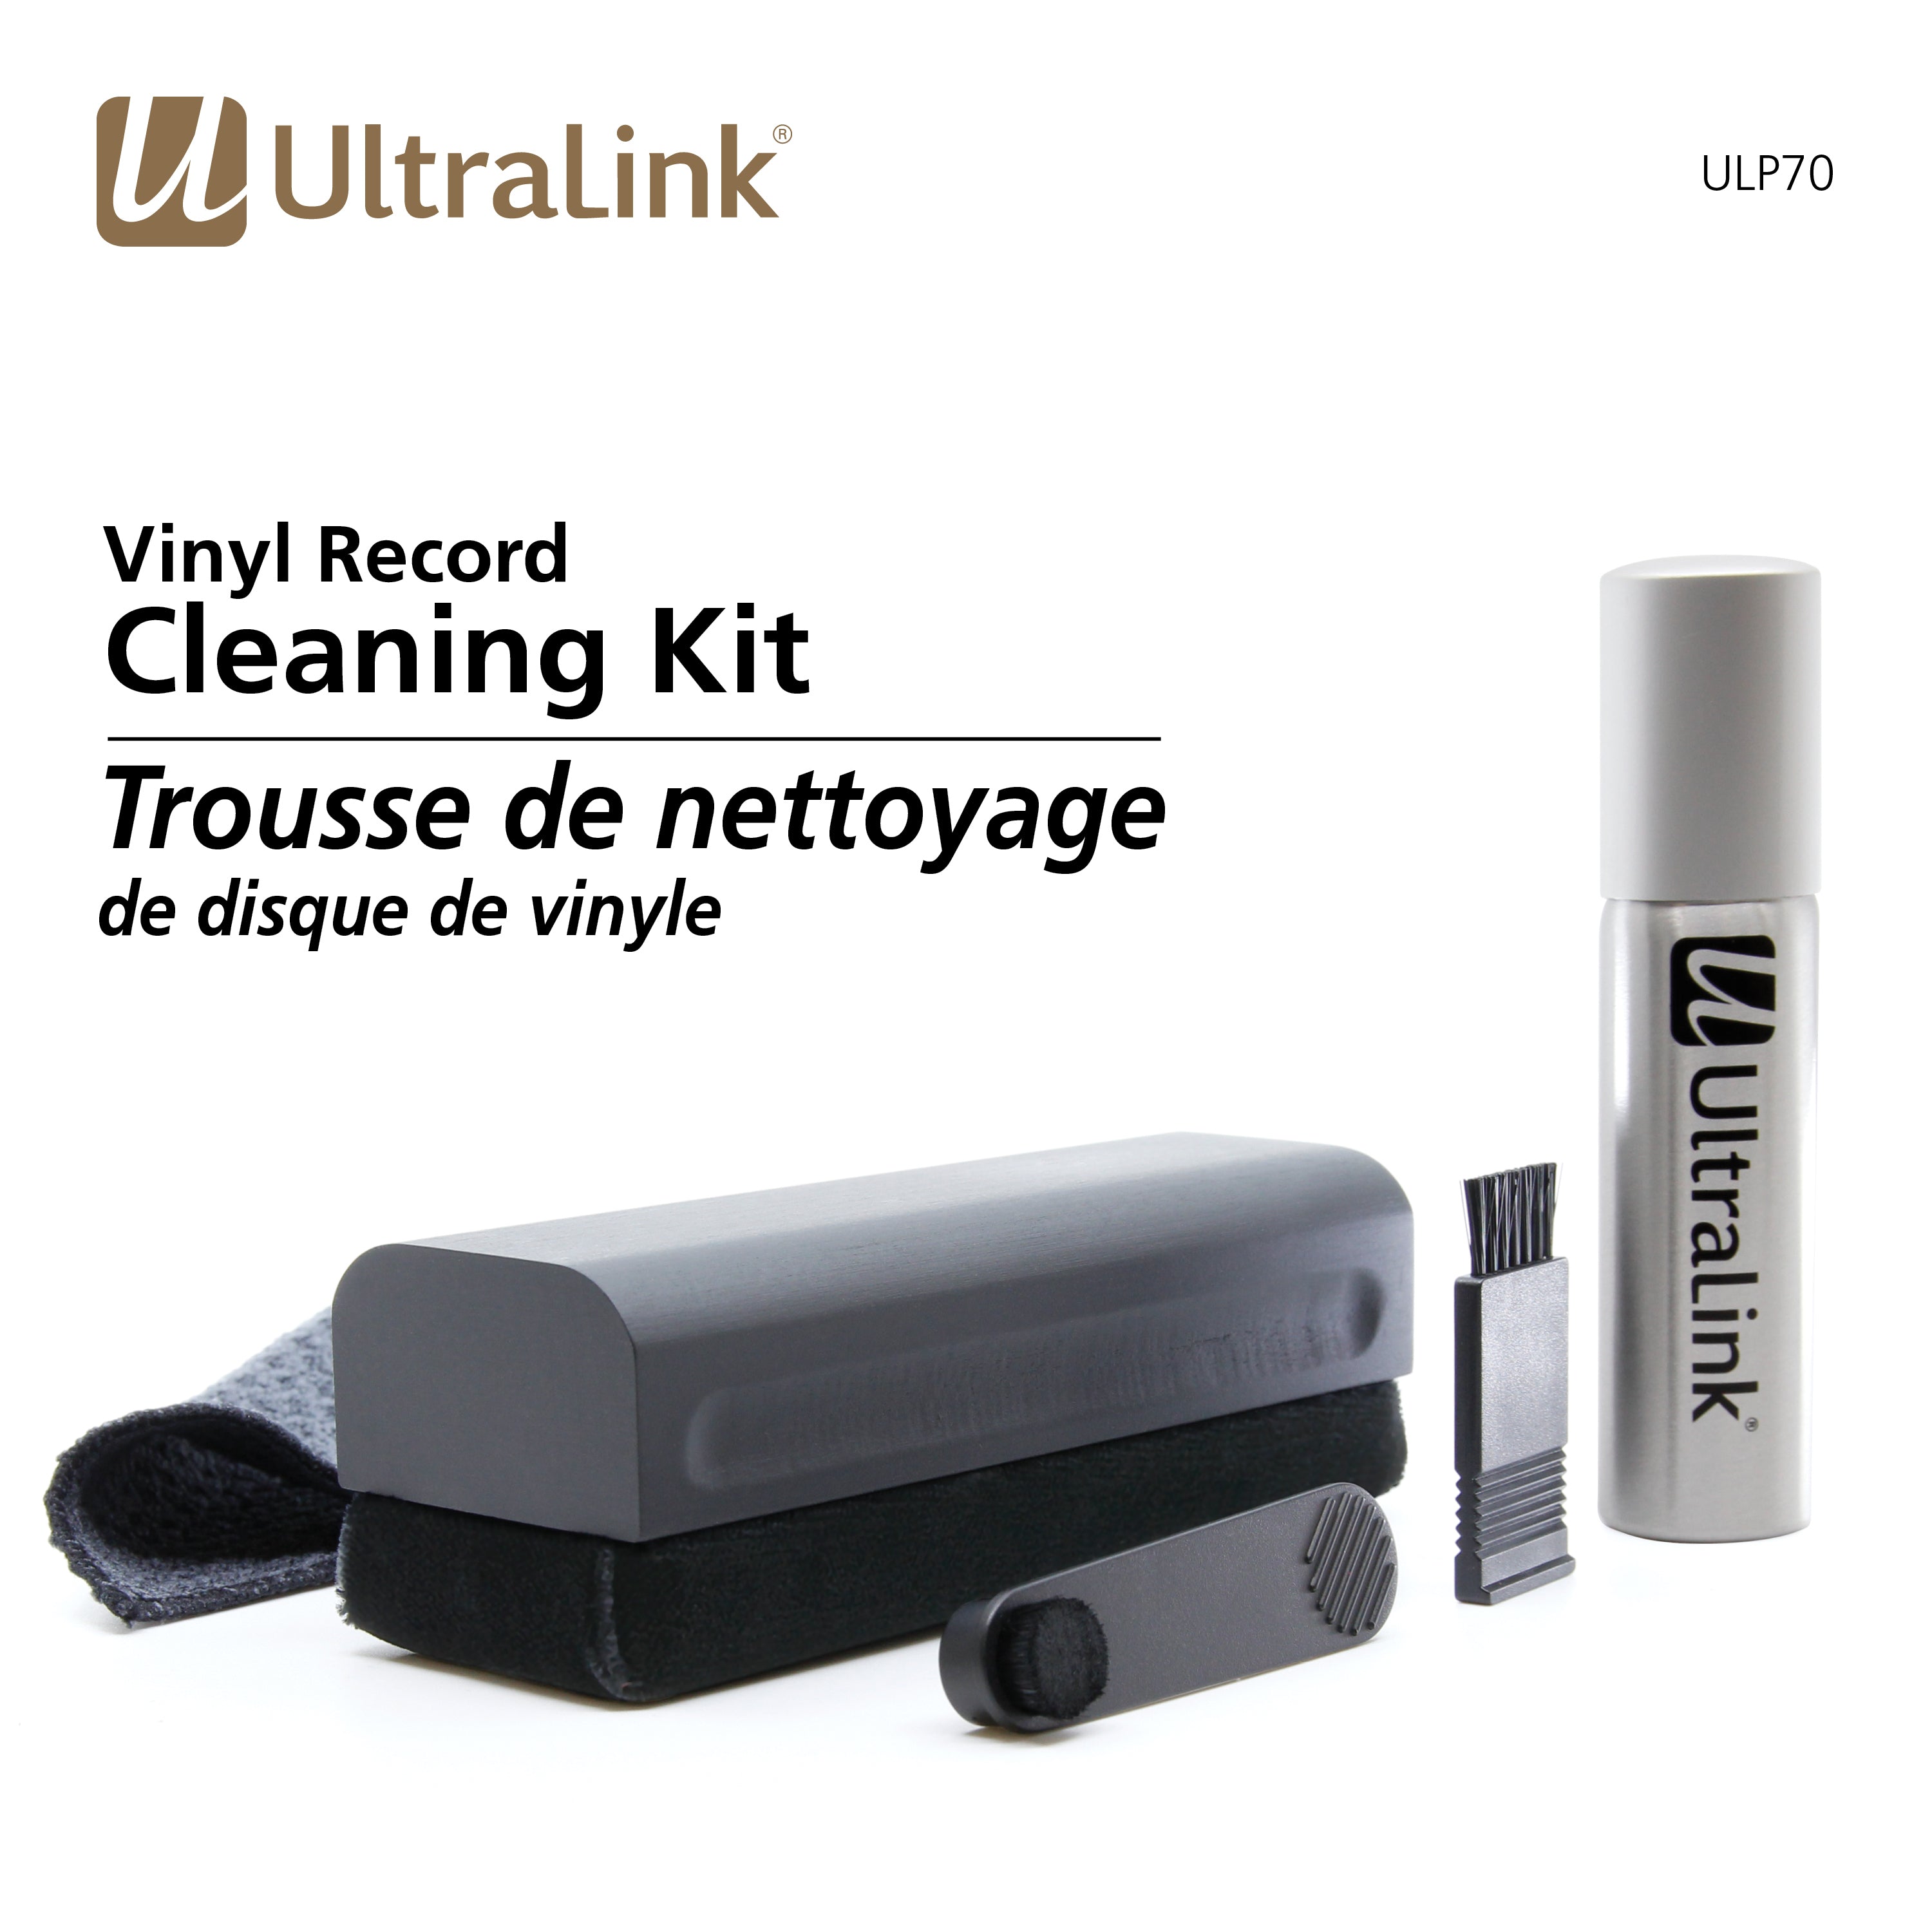 Ultralink Vinyl Record Cleaning Kit